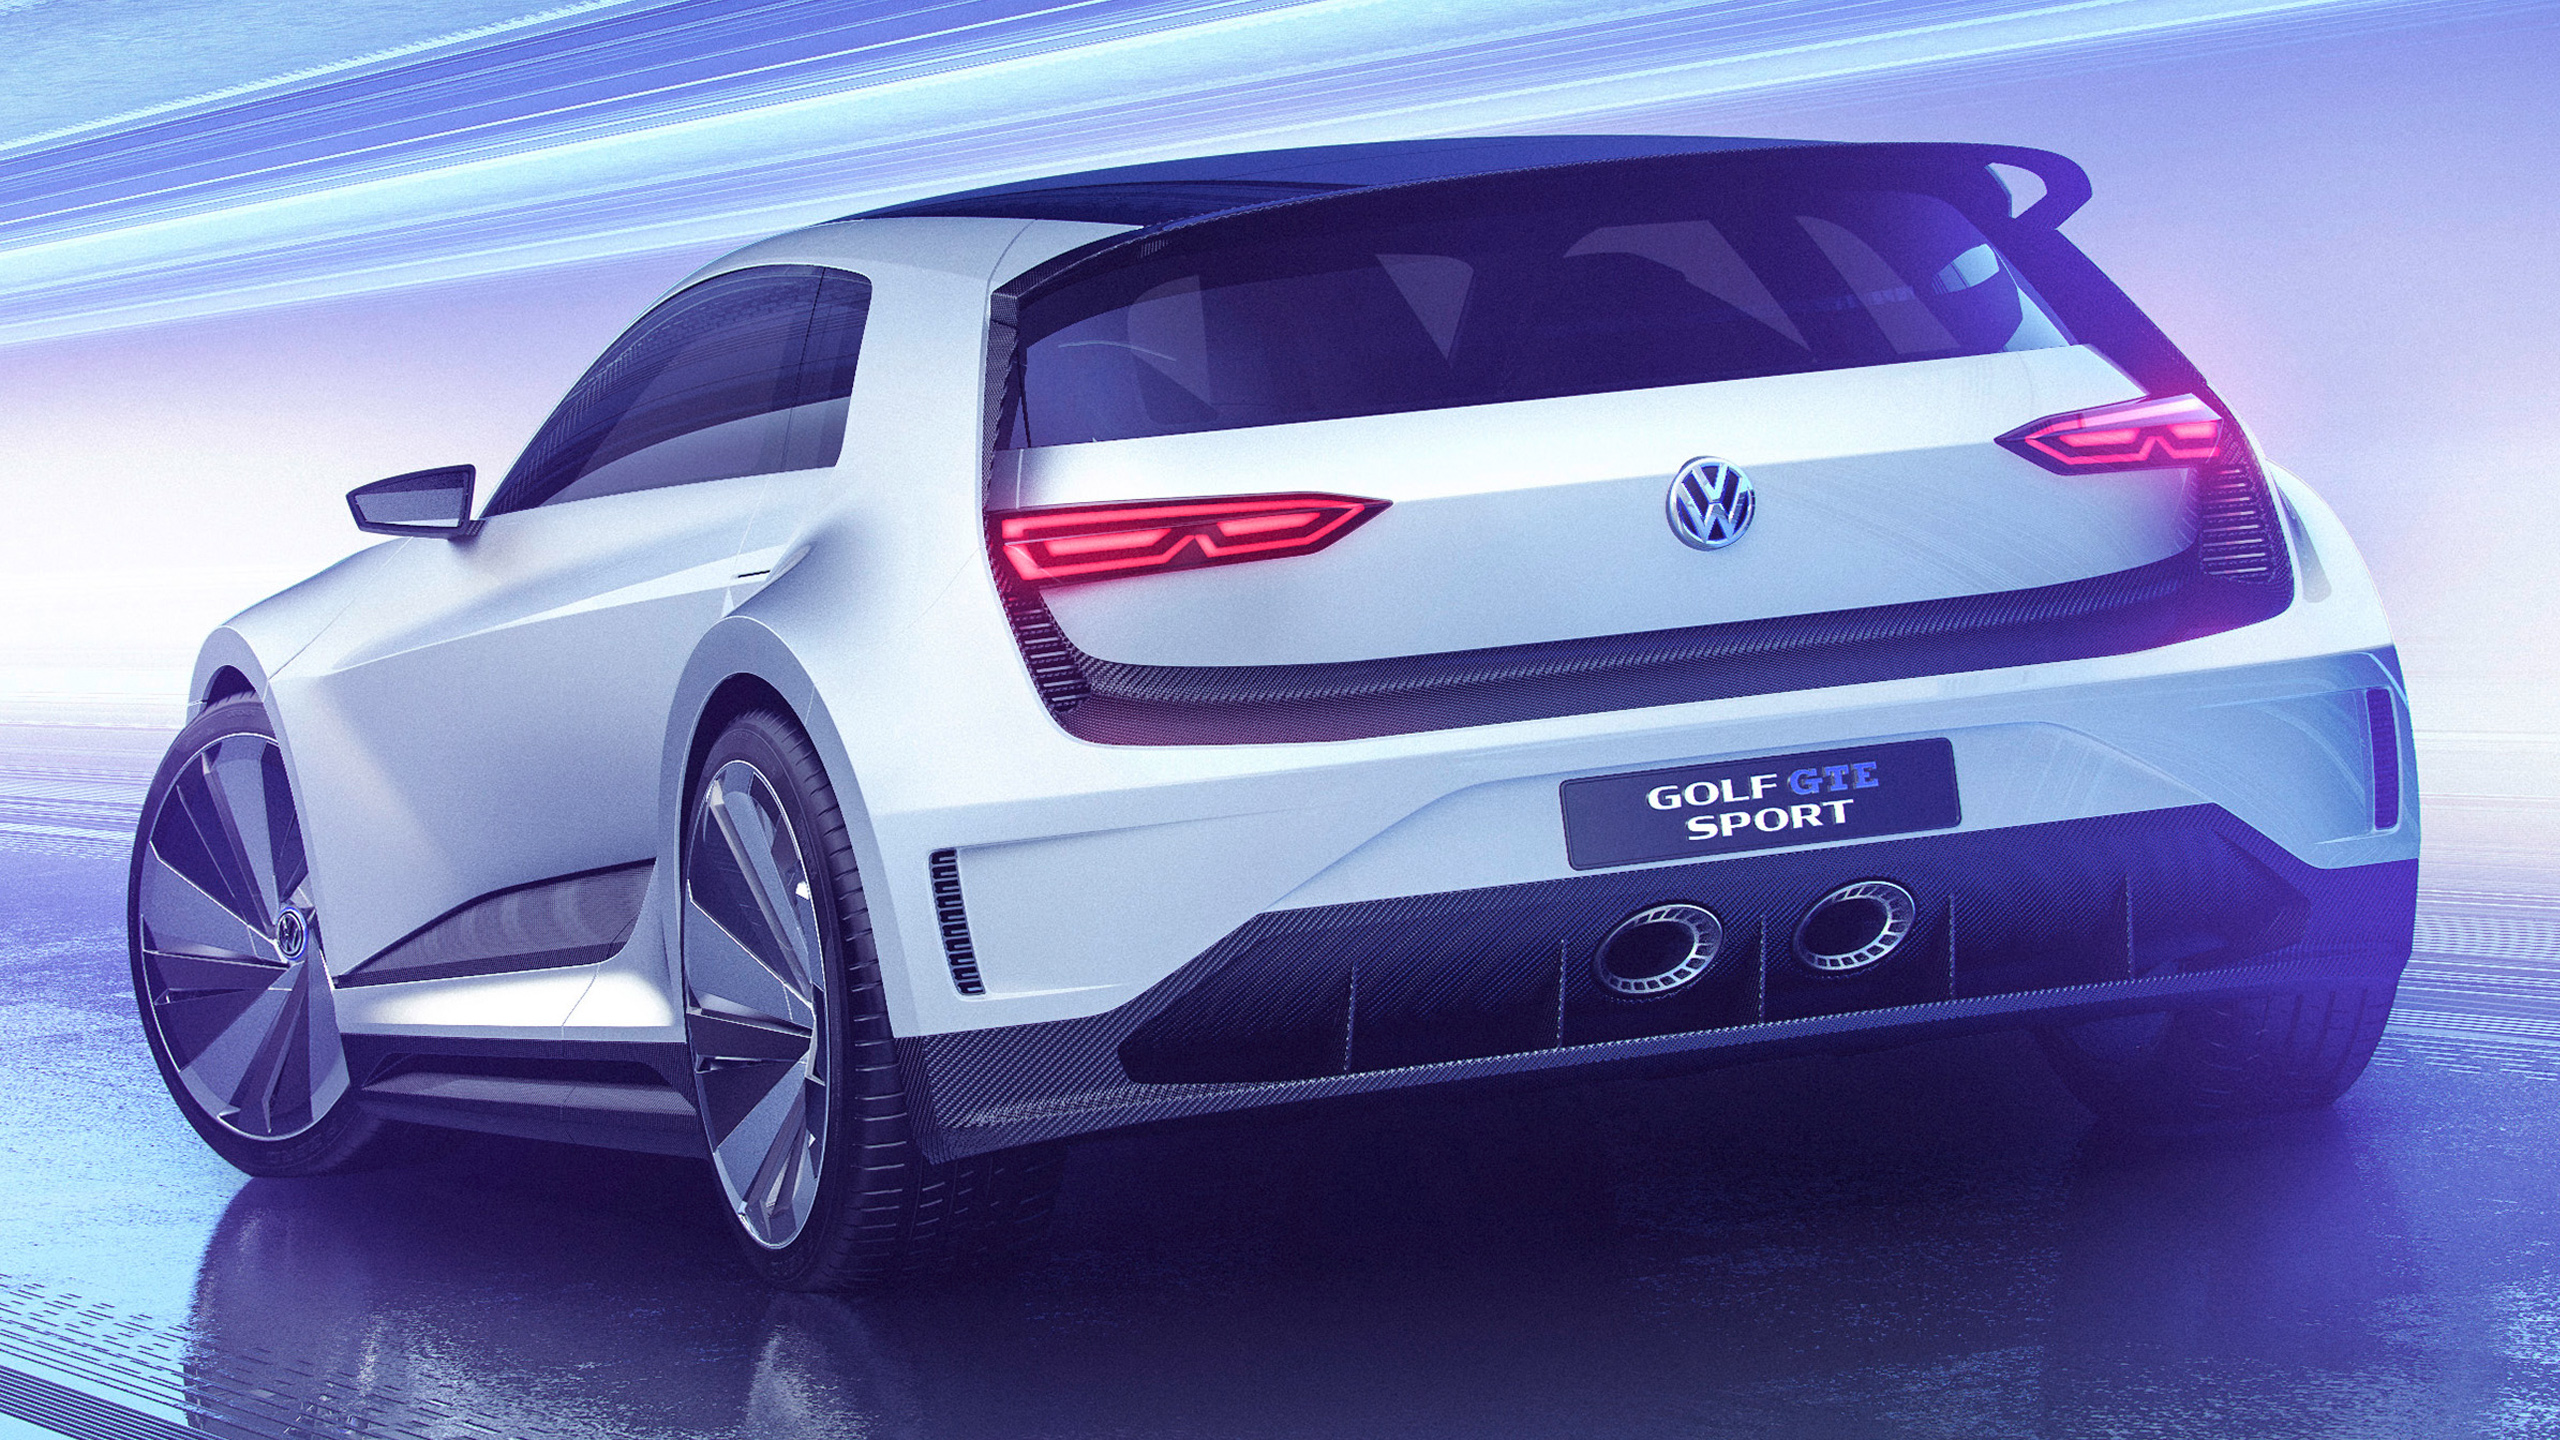 Volkswagen Golf Gte Sport Concept Wallpaper HD Car